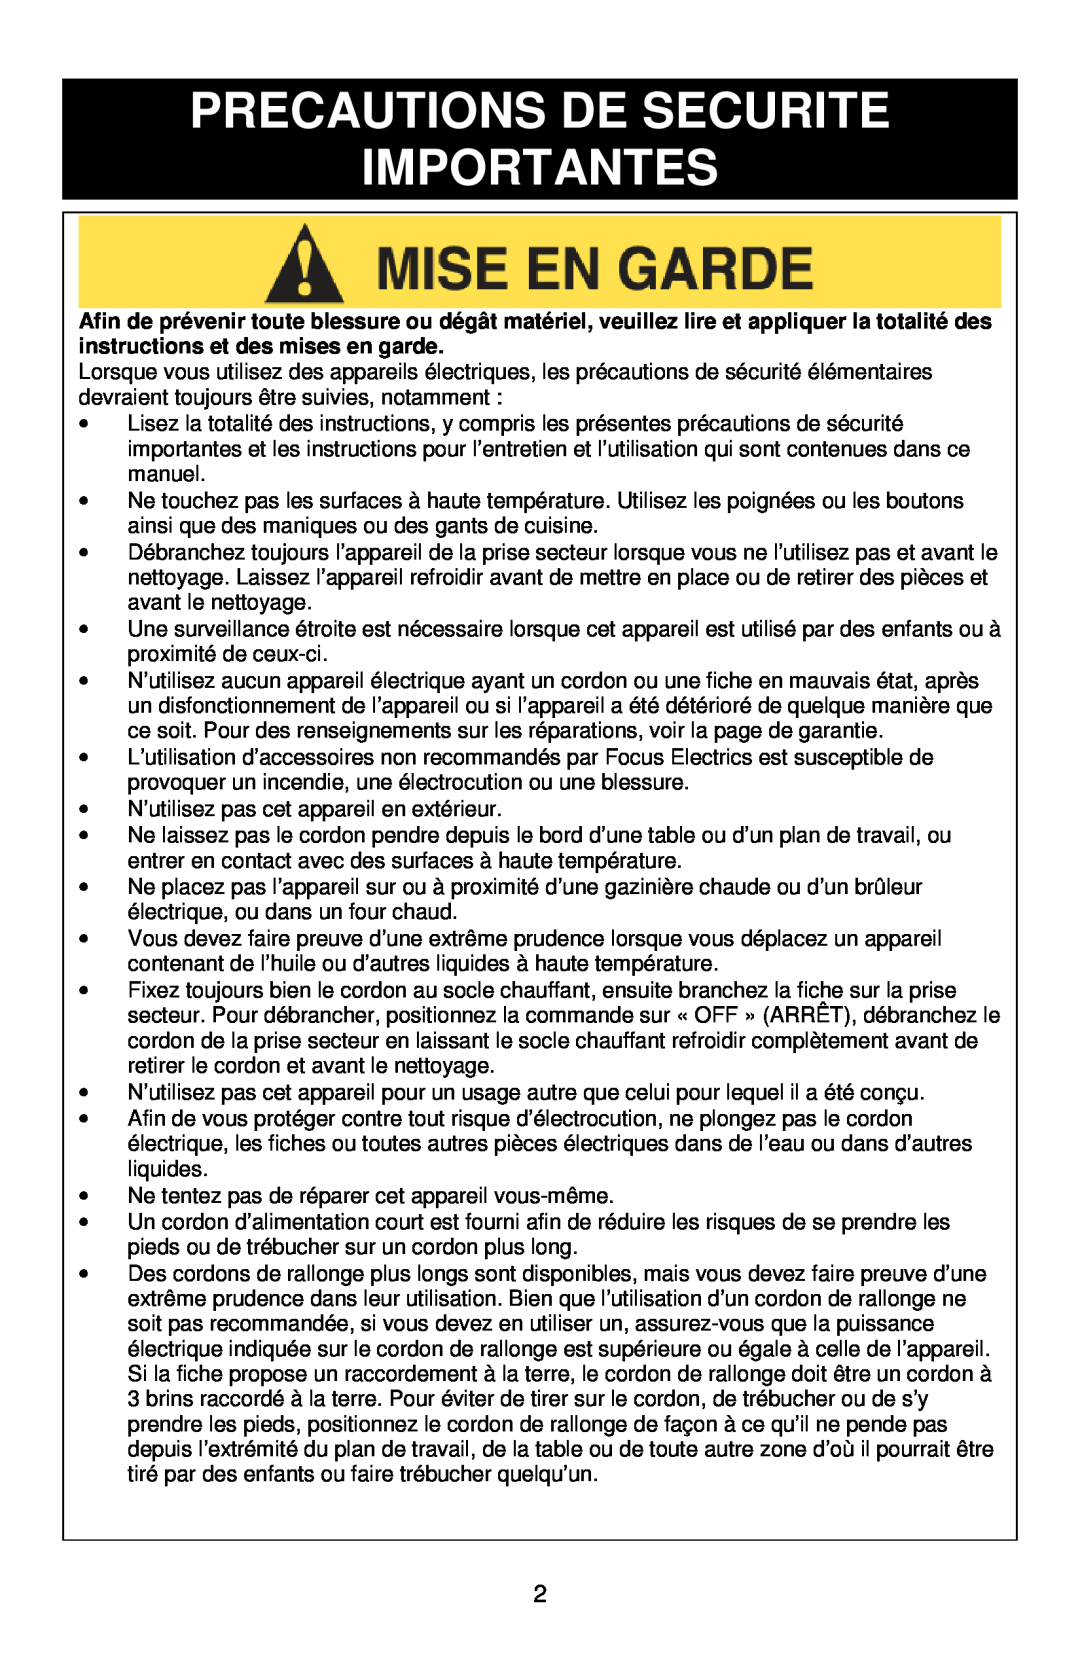 West Bend 84915 instruction manual Precautions De Securite Importantes 